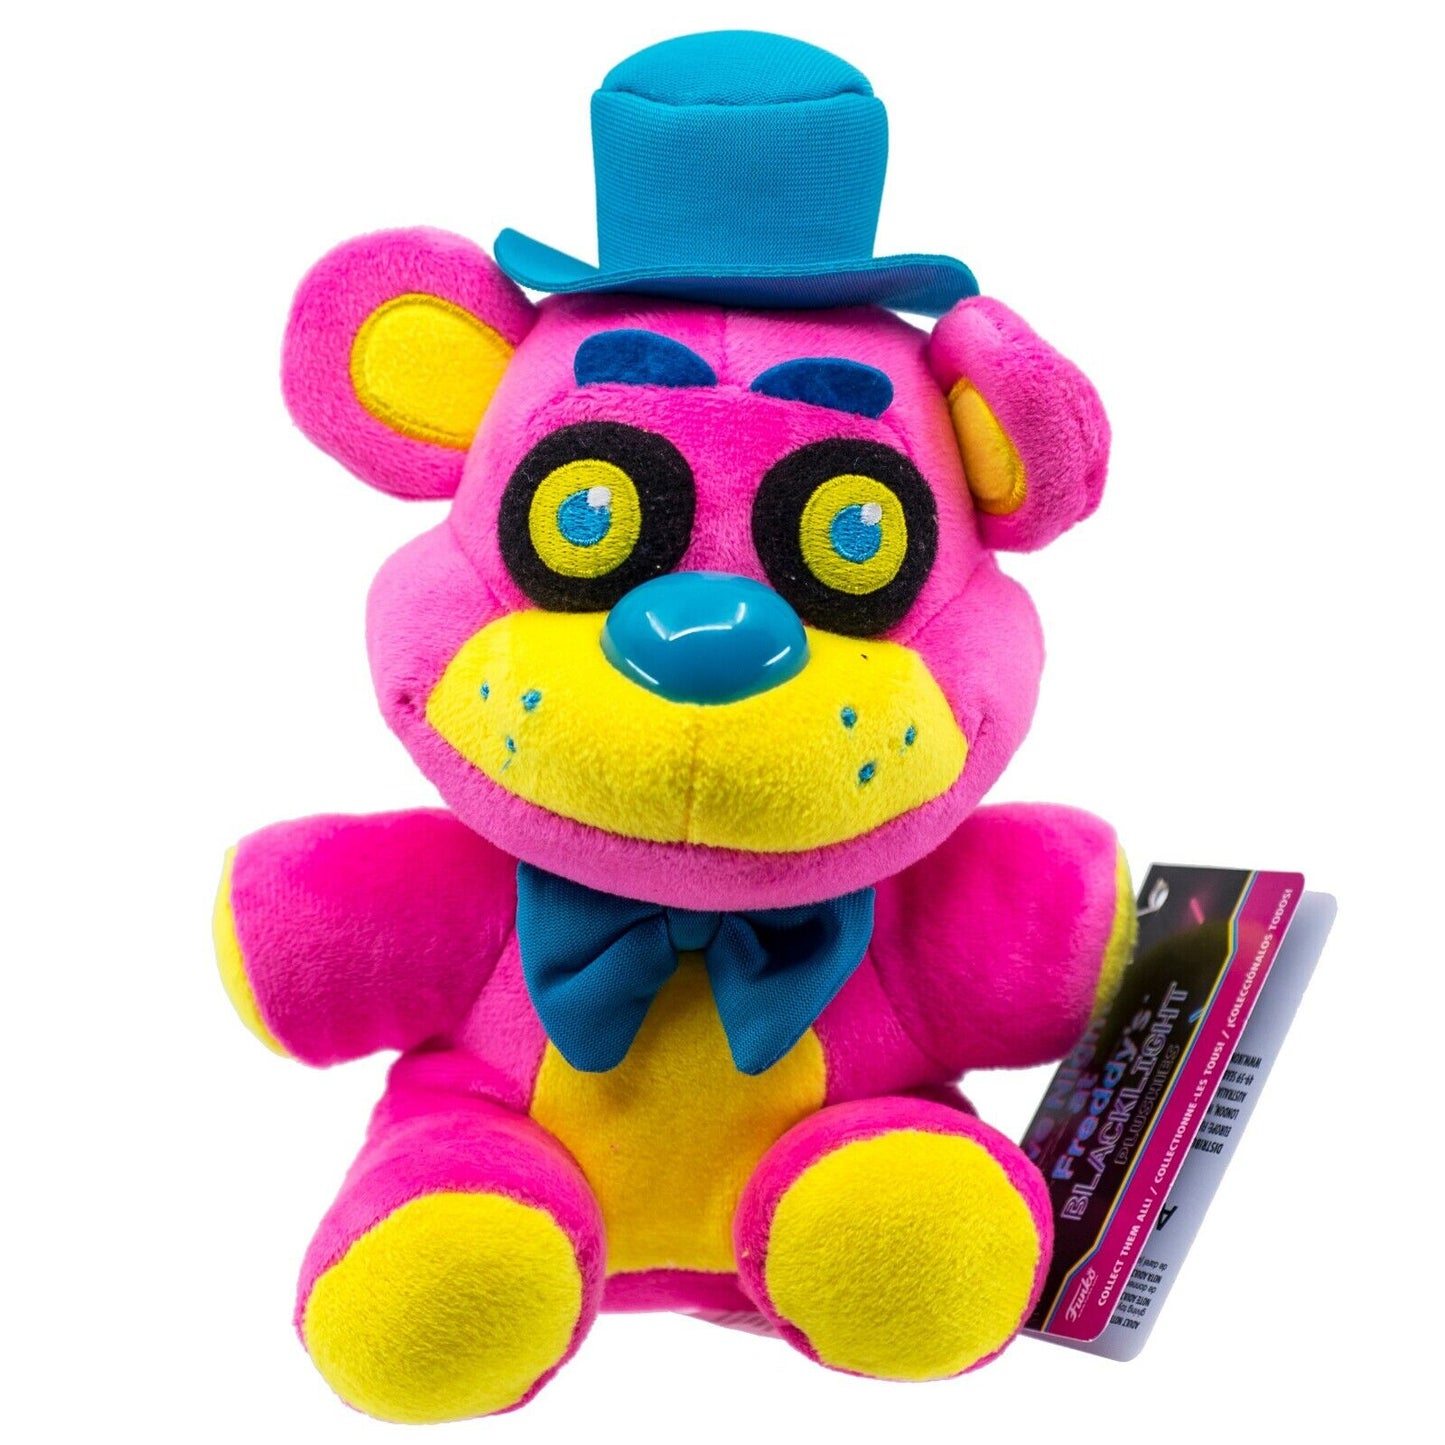 Funko Plush - Five Nights At Freddy's Blacklight Plushies - Freddy (Pink)